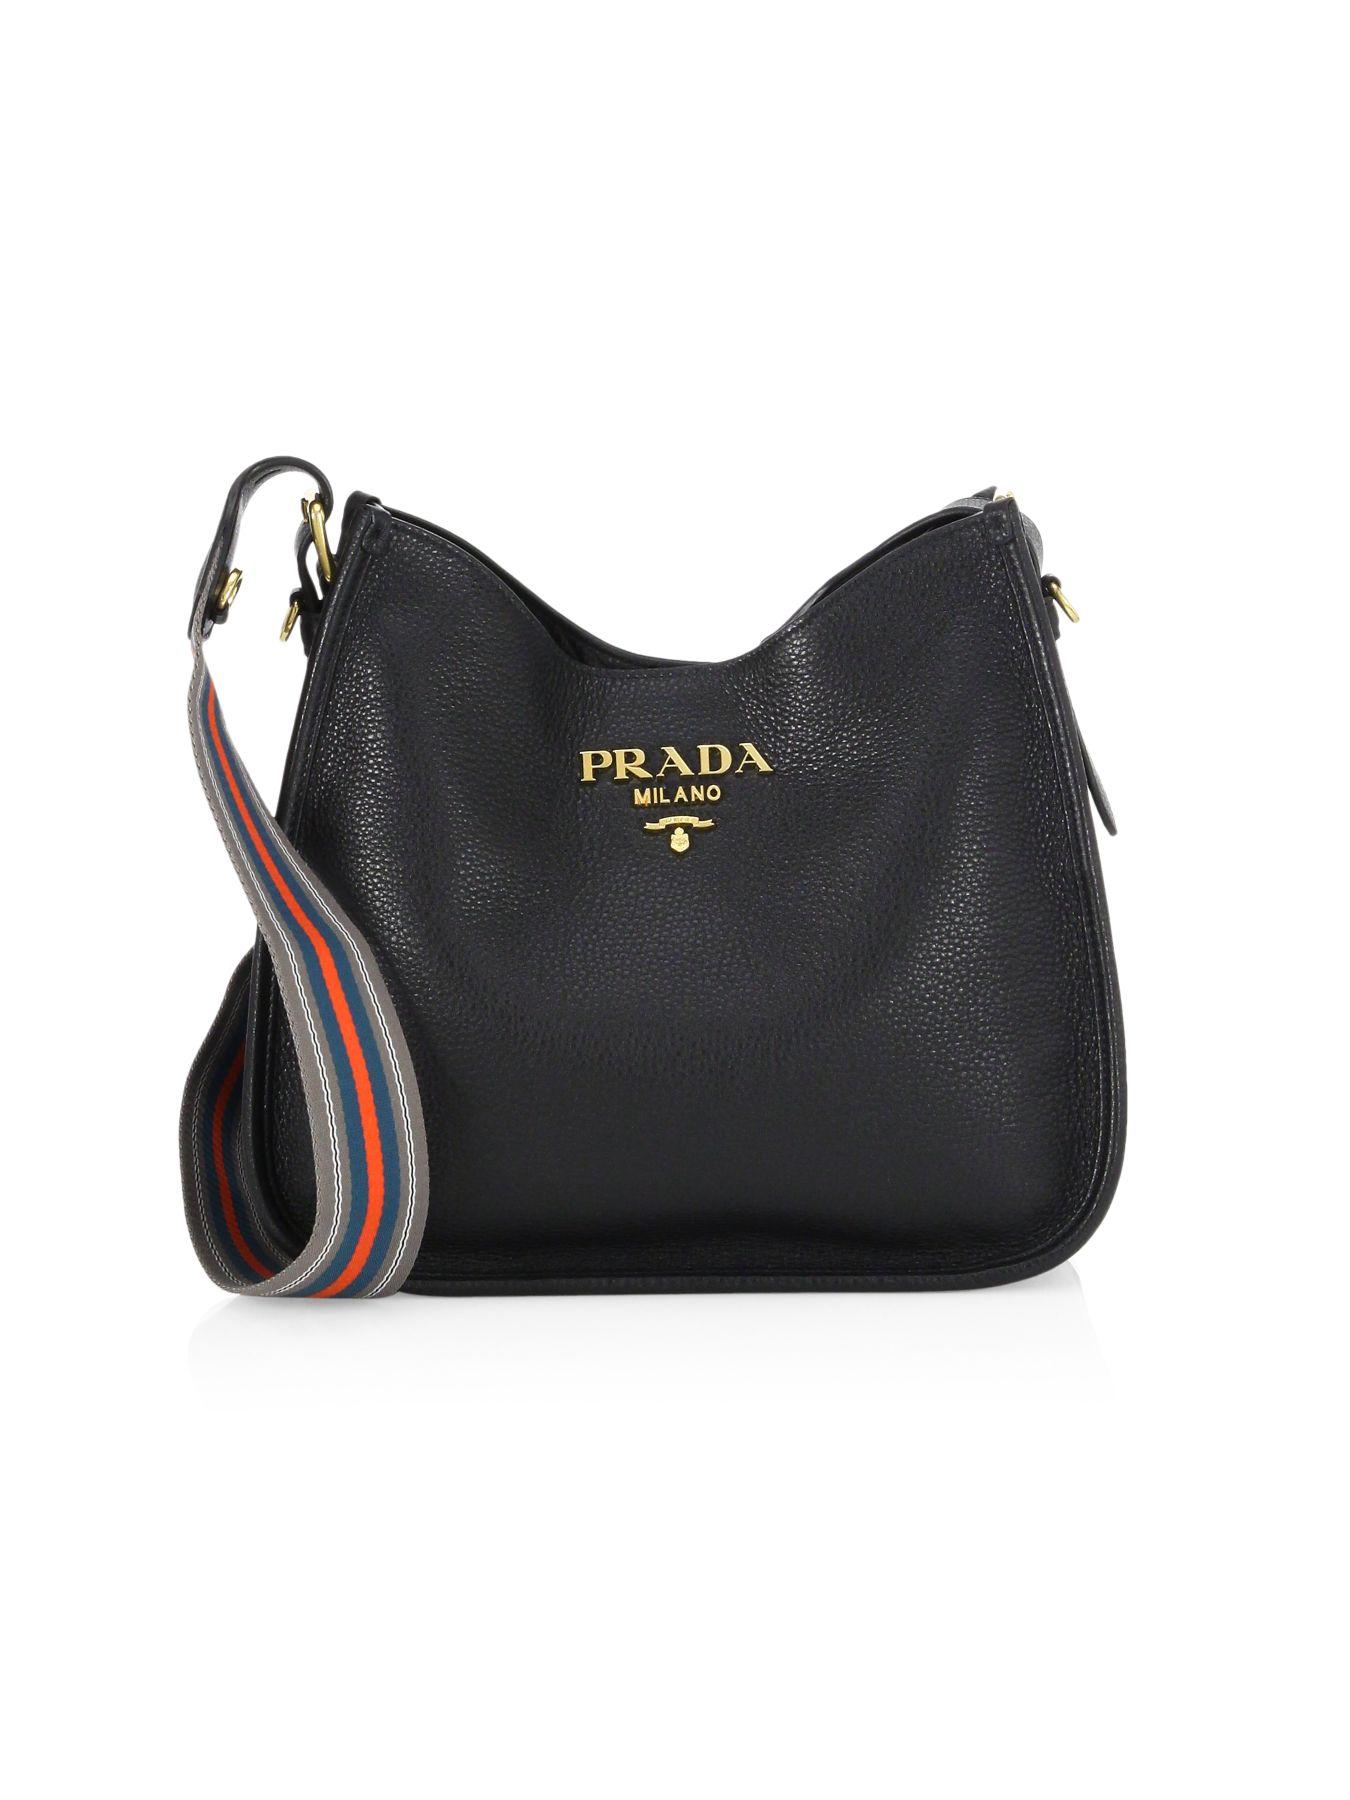 Prada Leather Small Daino Hobo Shoulder Bag in Black | Lyst